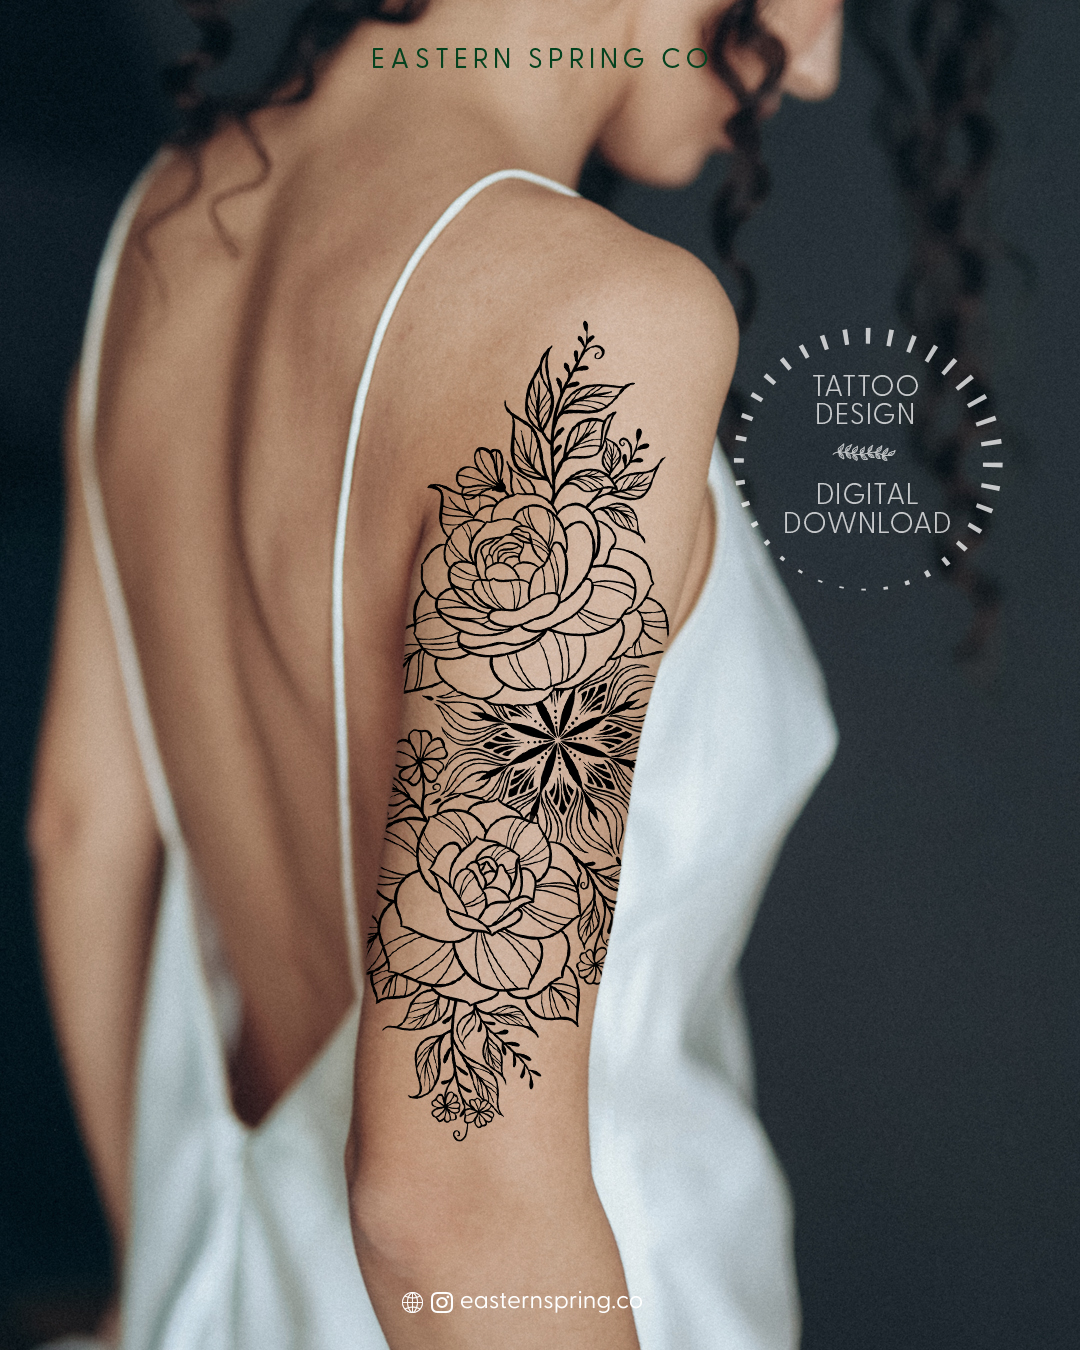 Eastern Spring Co artistic tattoo design flowers with mandala